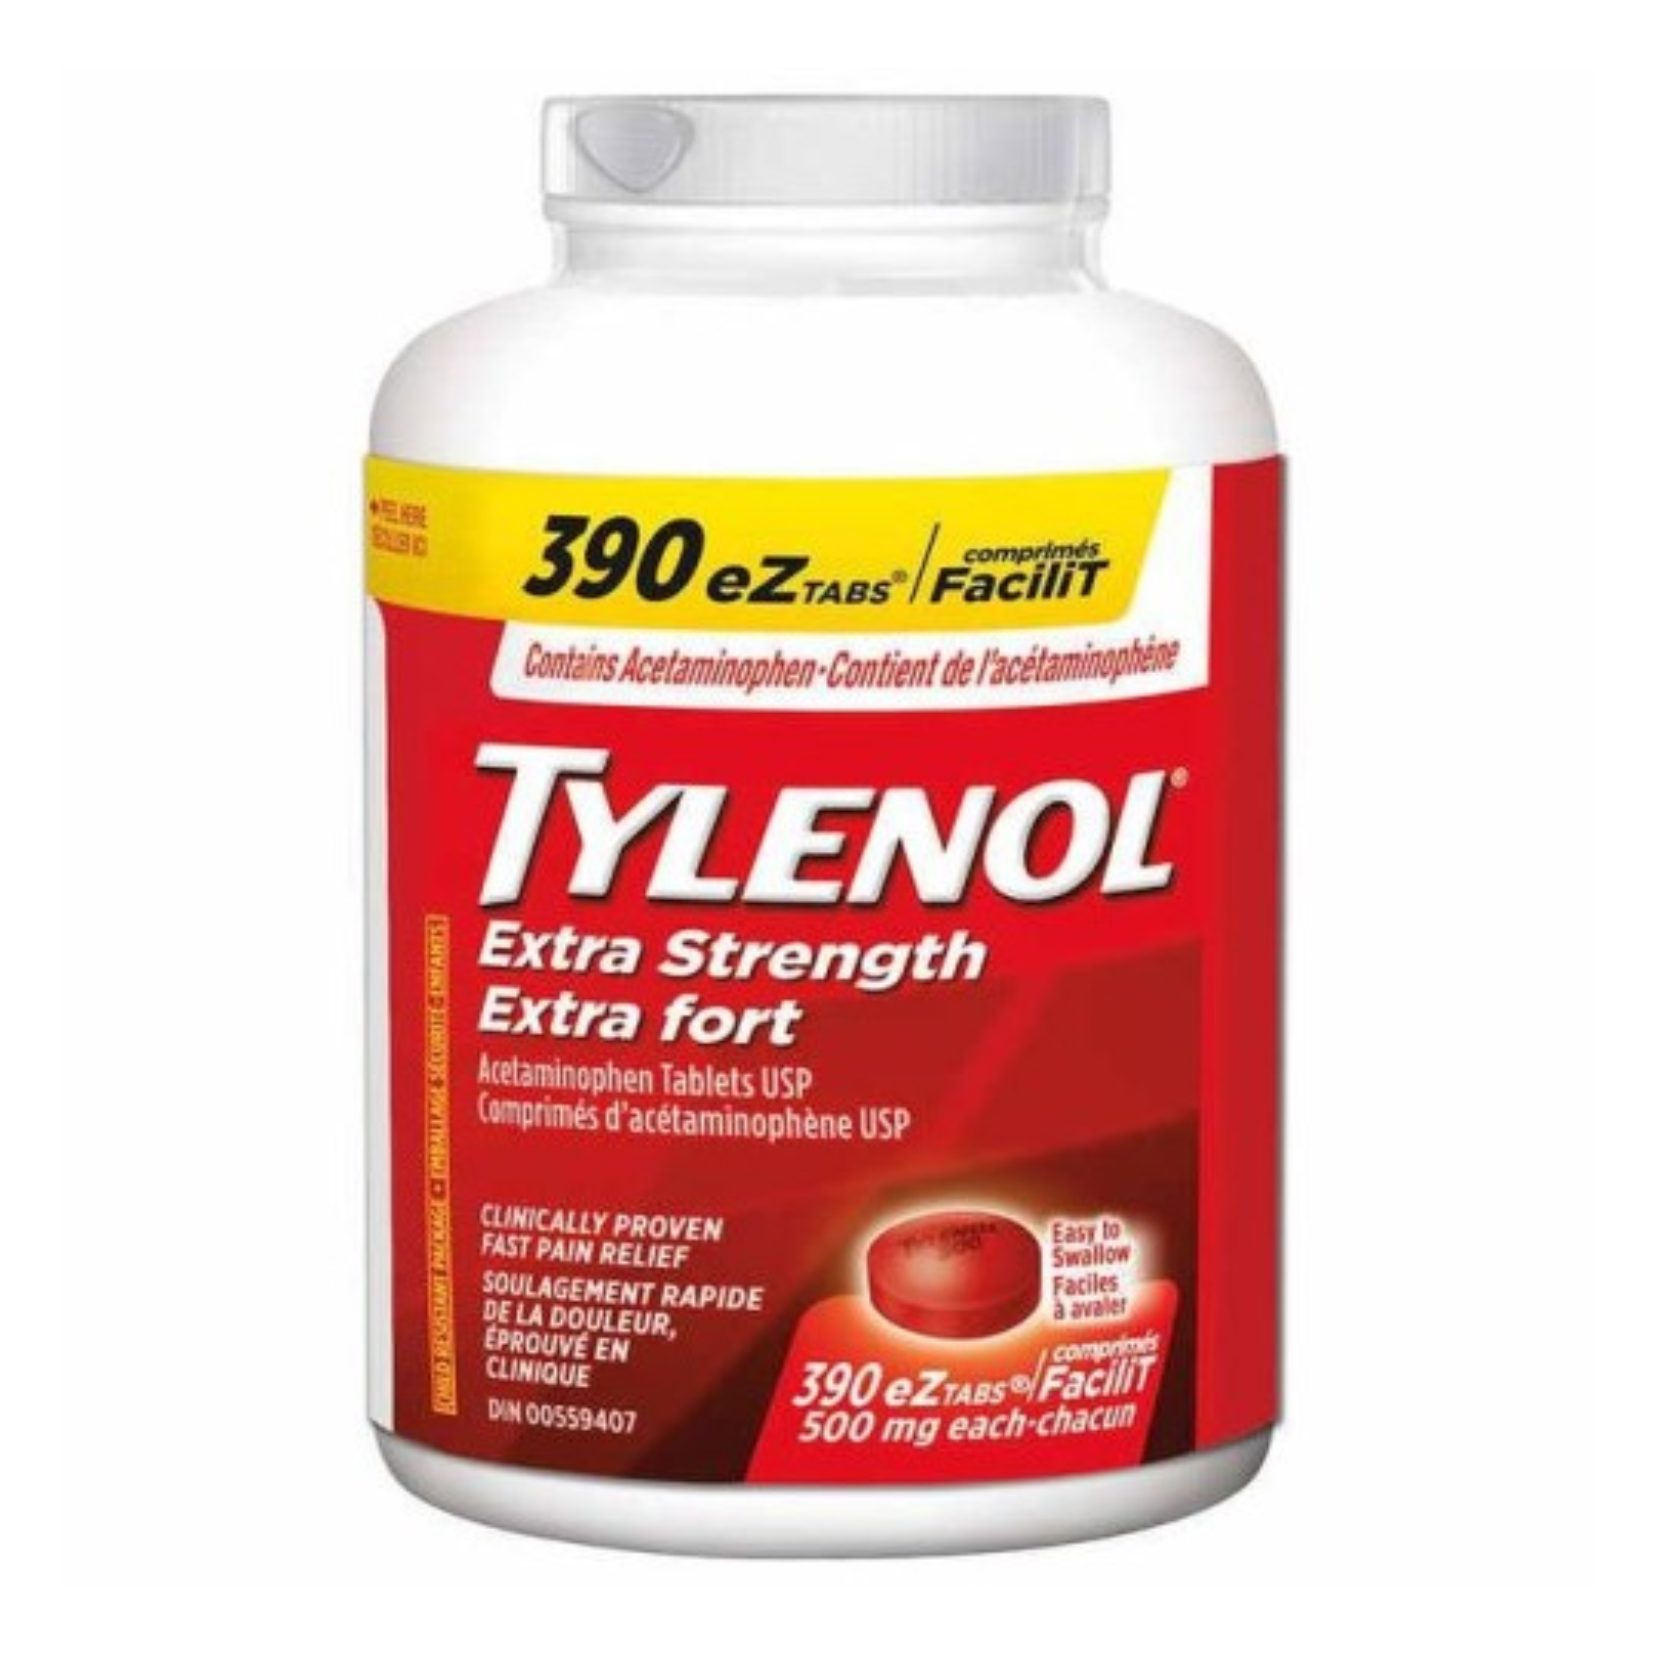 Tylenol Extra Strength Ez Tablets 500mg x 390